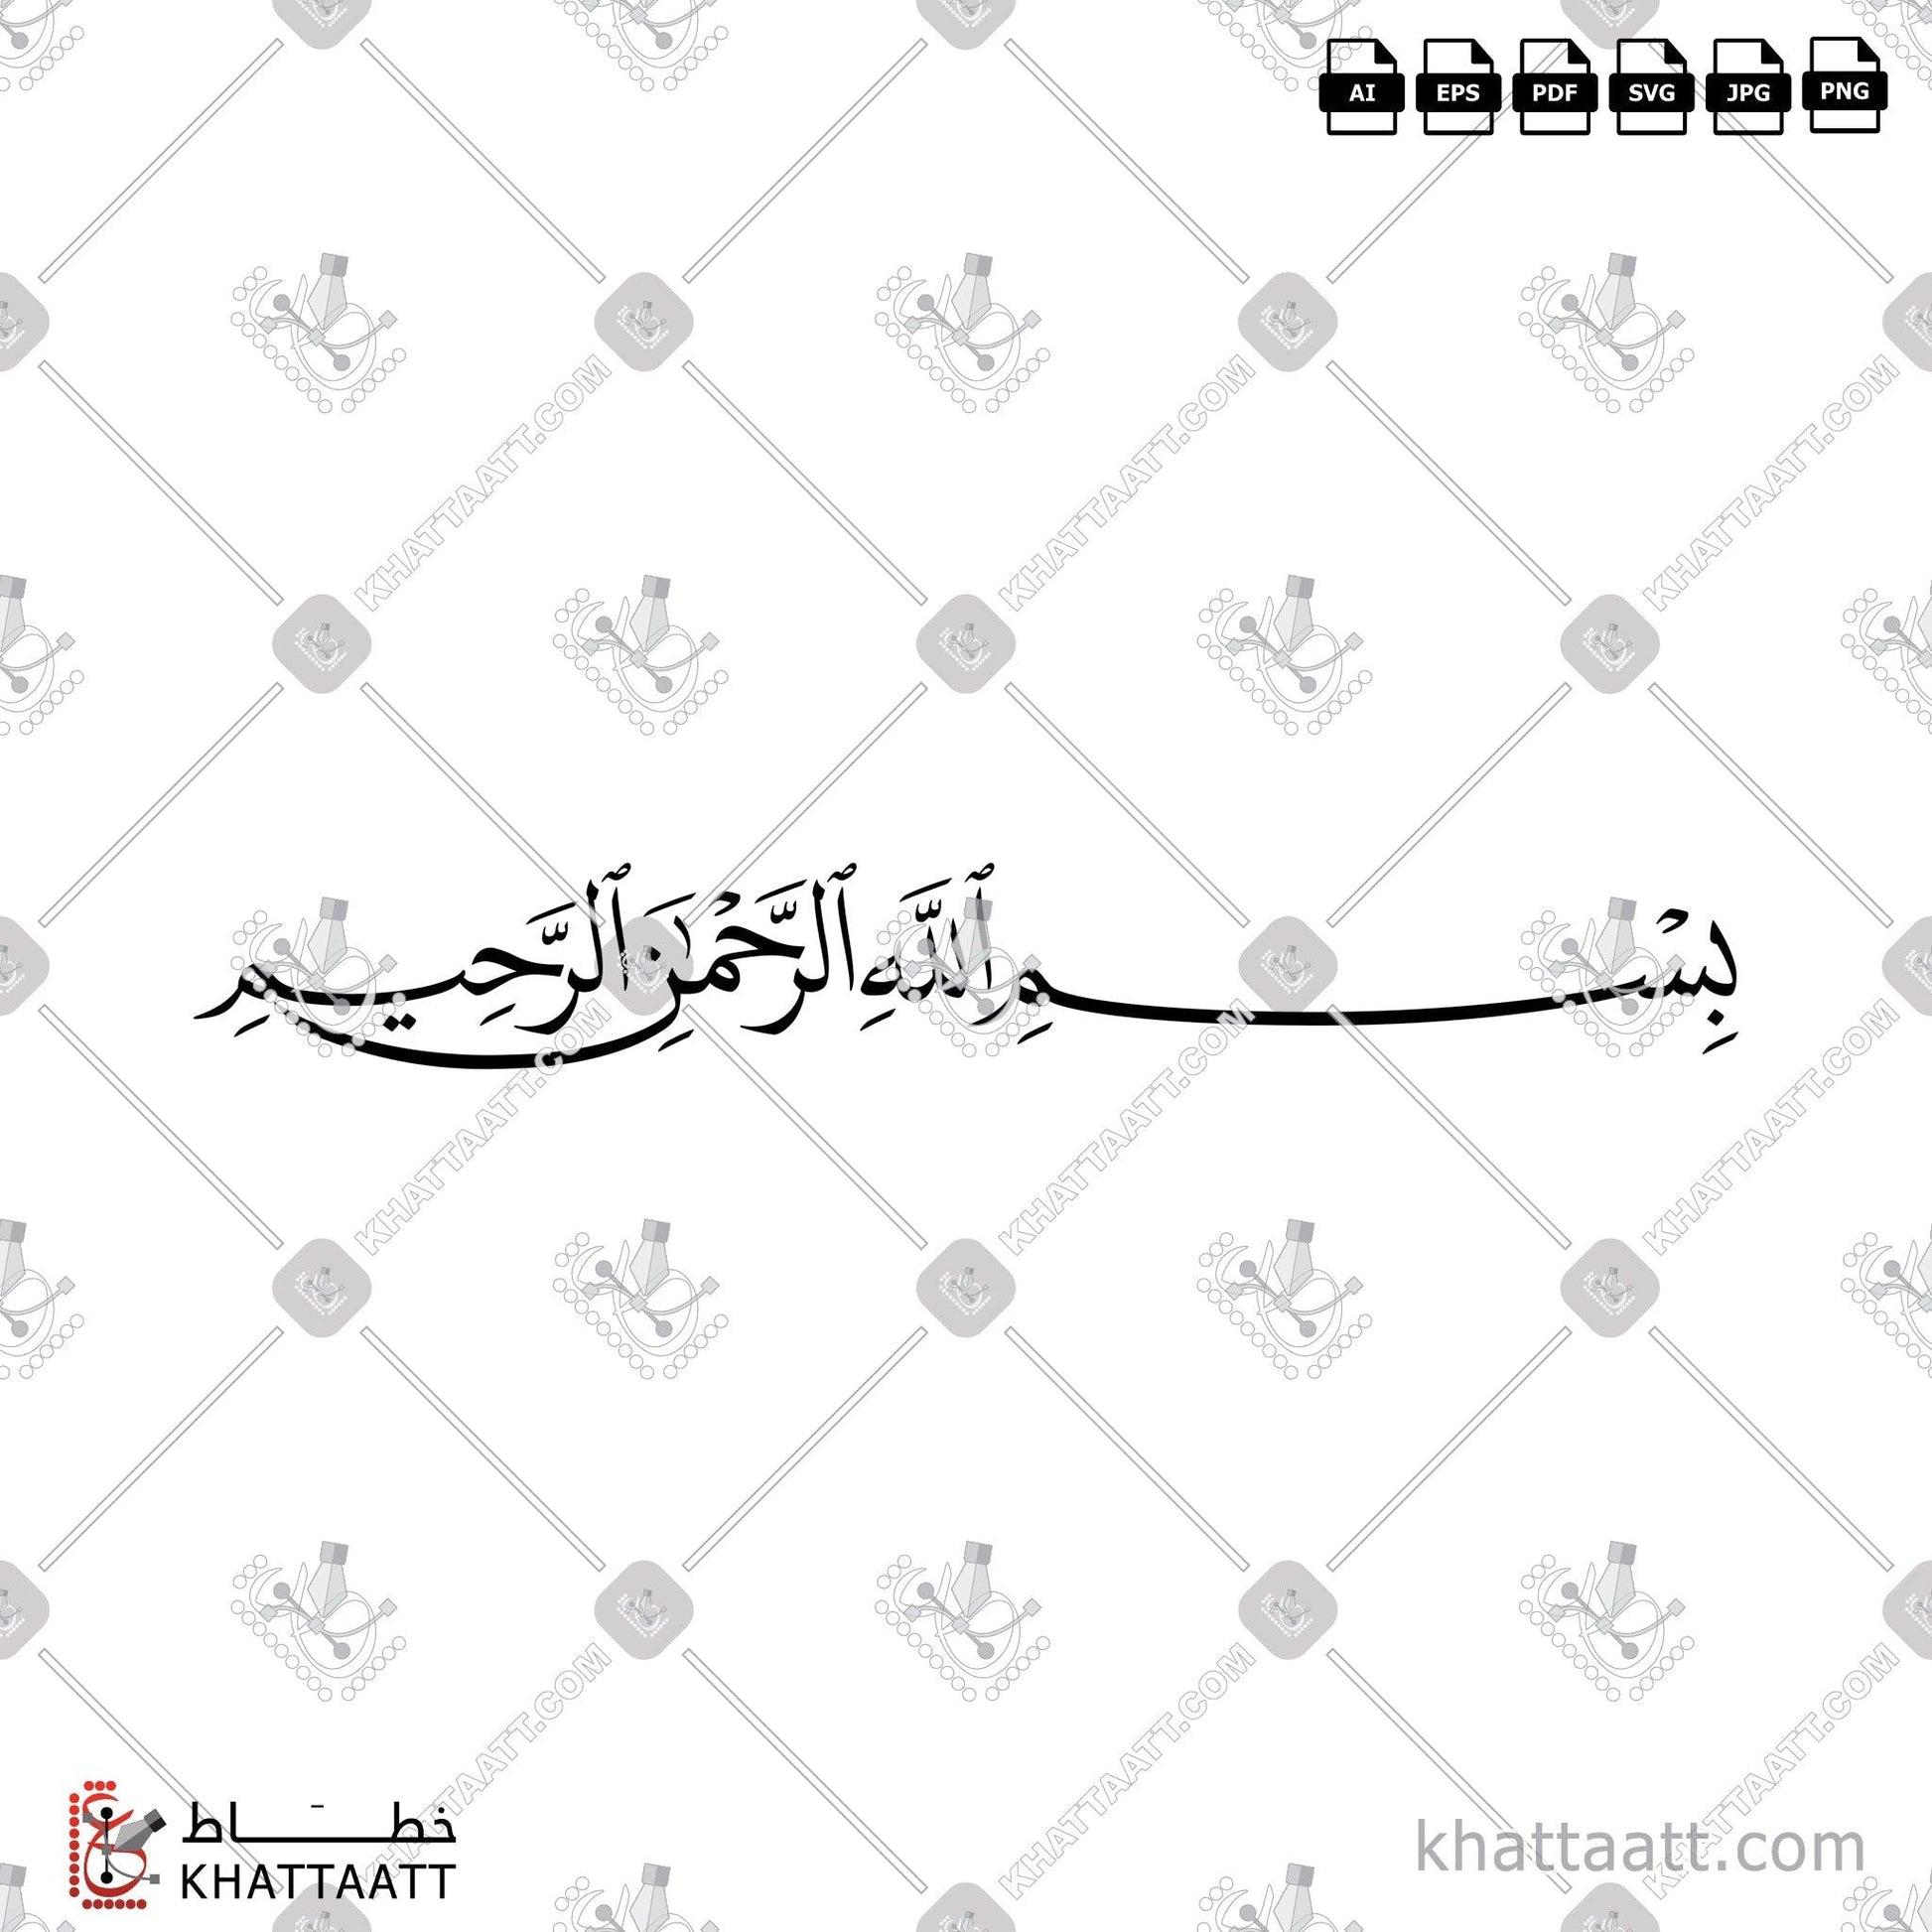 Download Arabic Calligraphy of بسم الله الرحمن الرحيم in Naskh - خط النسخ in vector and .png